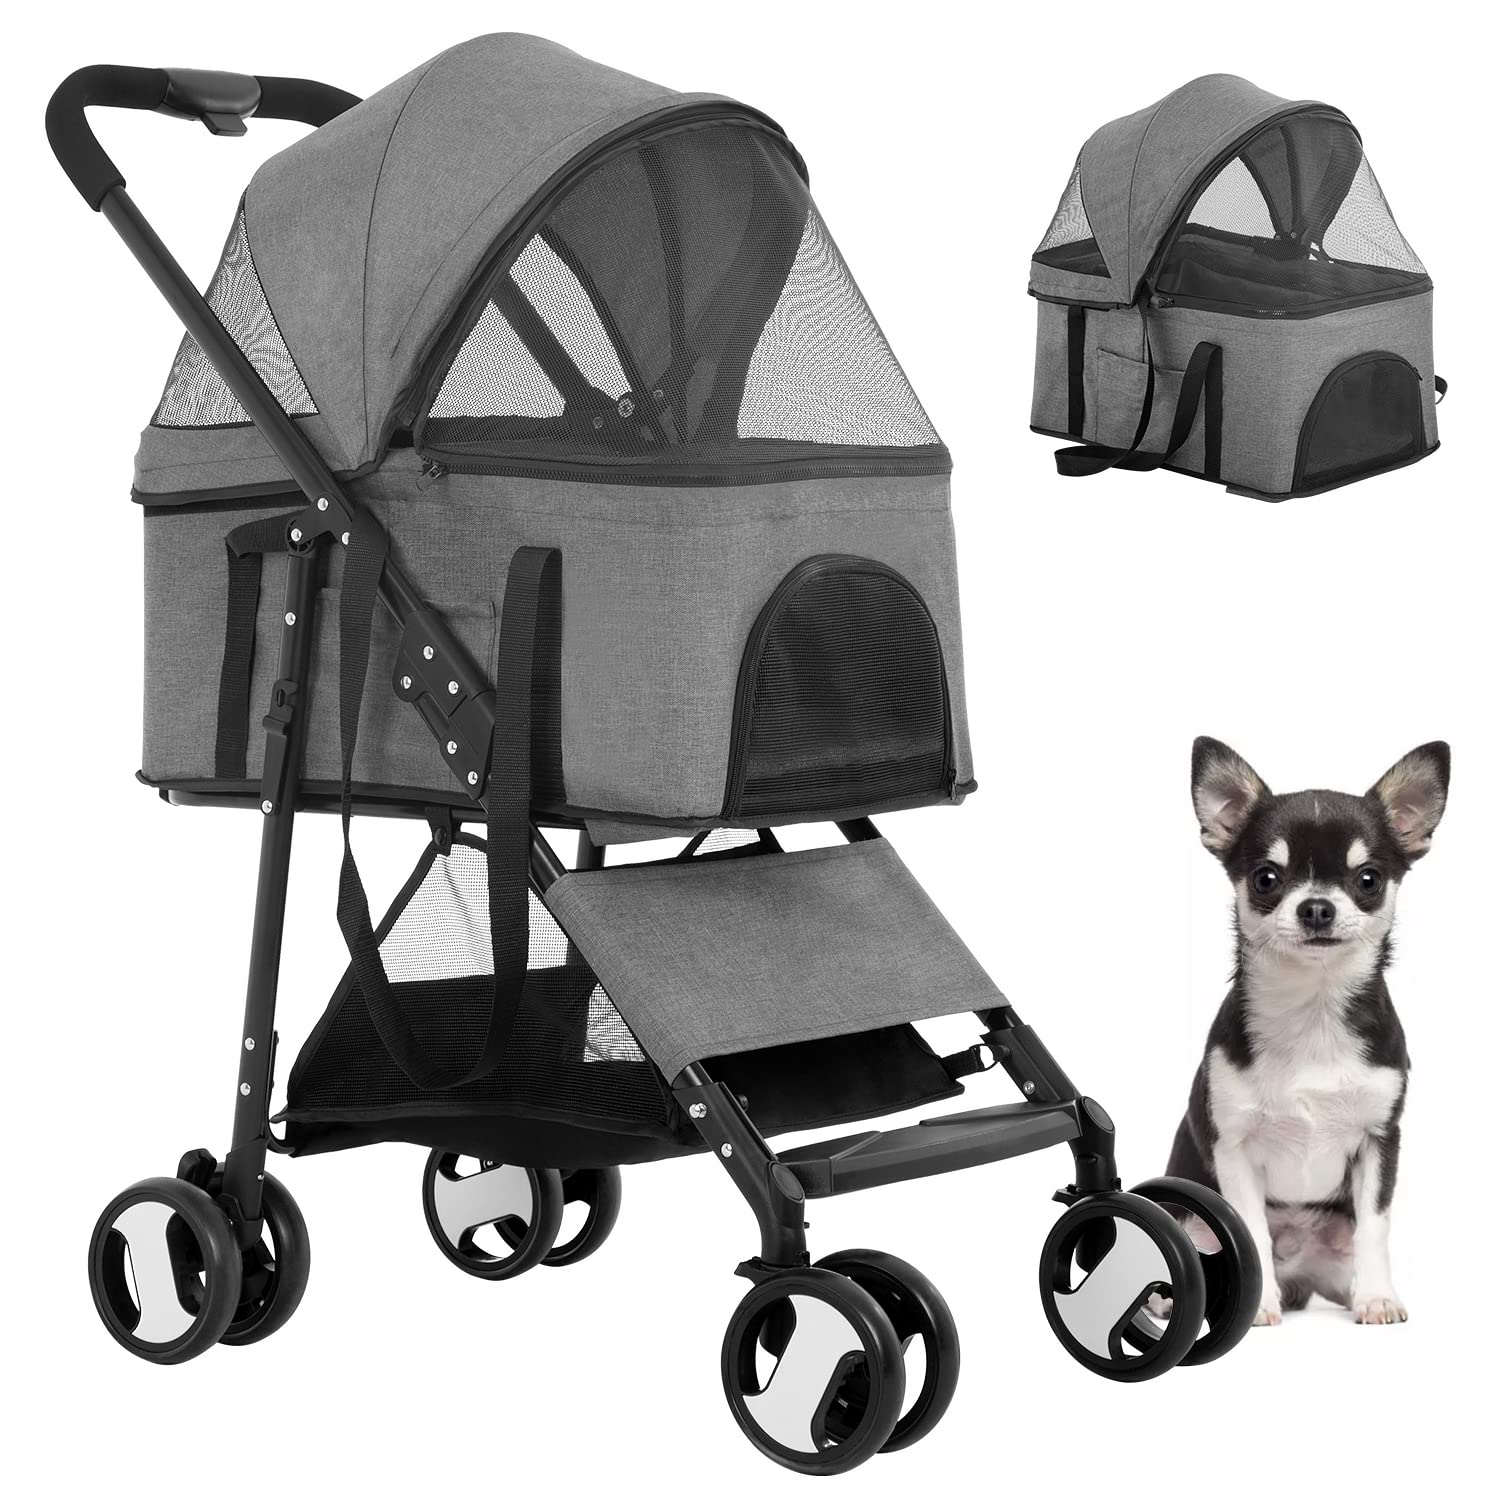 BestPet Pet Stroller Premium 3-in-1 Multifunction Dog cat Jogger Stroller for Medium Small Dogs cats Folding Lightweight Travel 